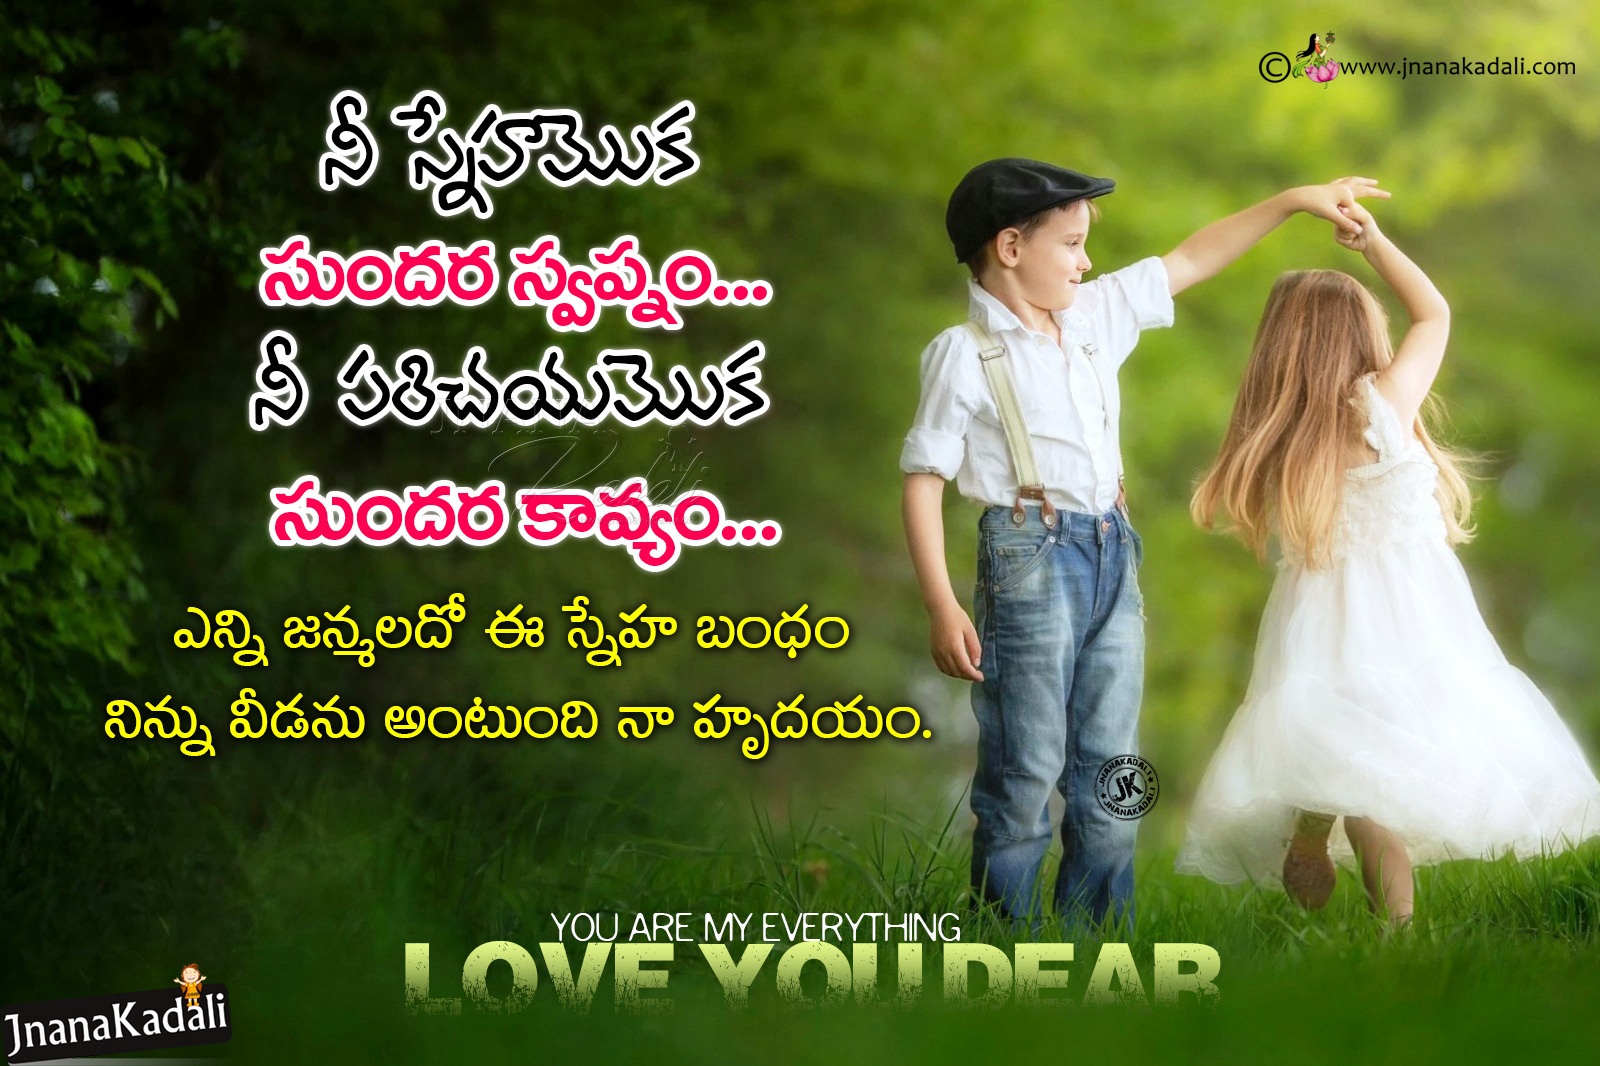  Cute  Telugu Love Quote  Telugu Love Poems with Cute  Couple  